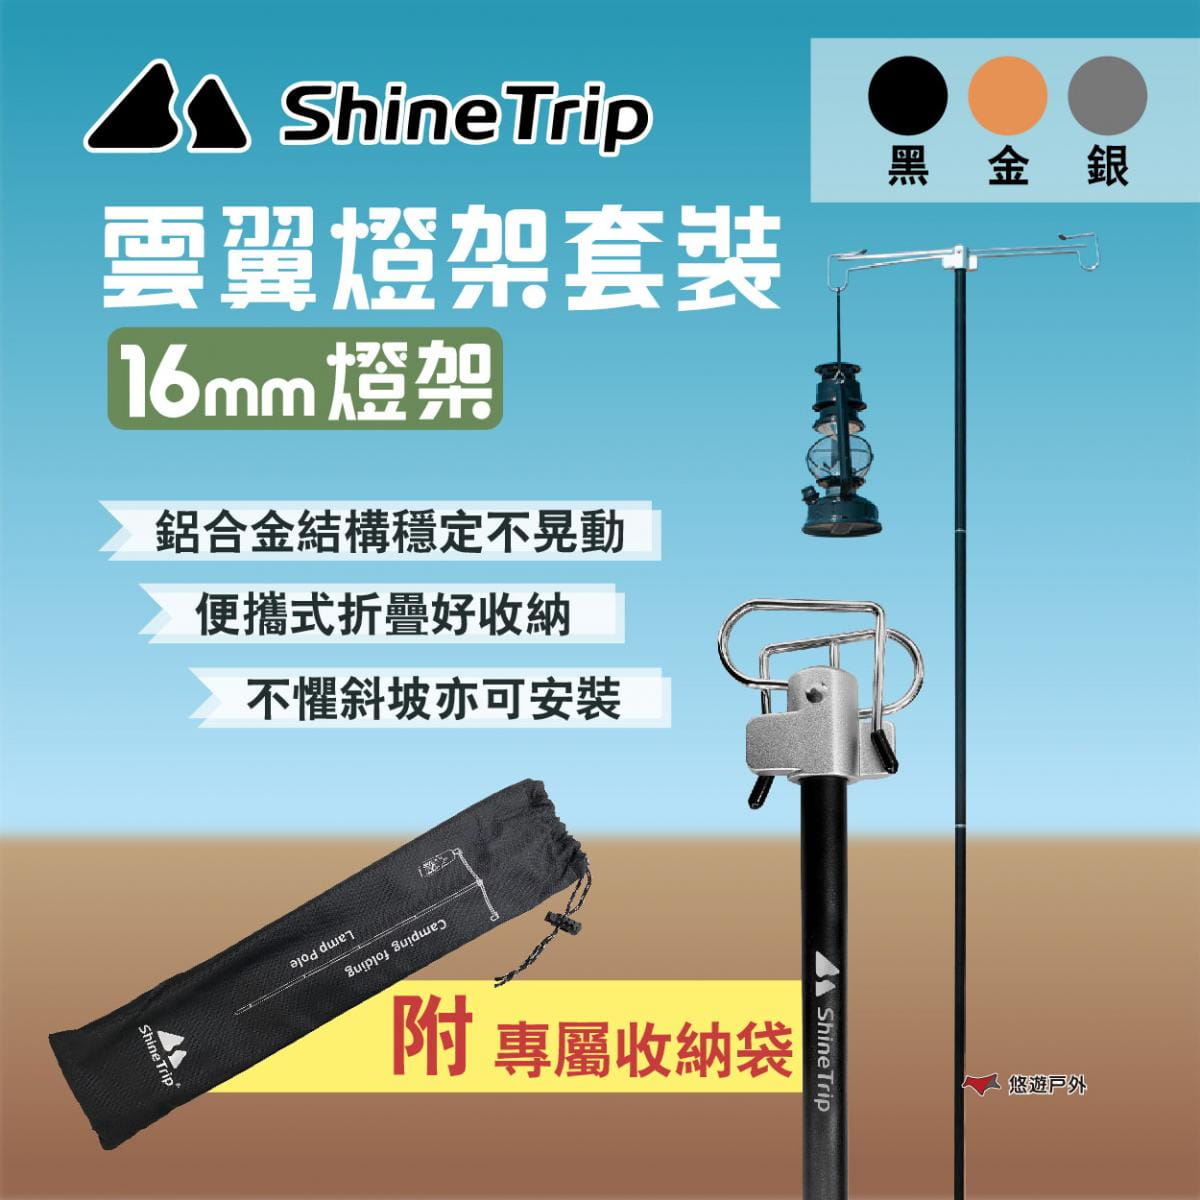 【Shine Trip 山趣】雲翼燈架套裝 16mm燈架 悠遊戶外 1